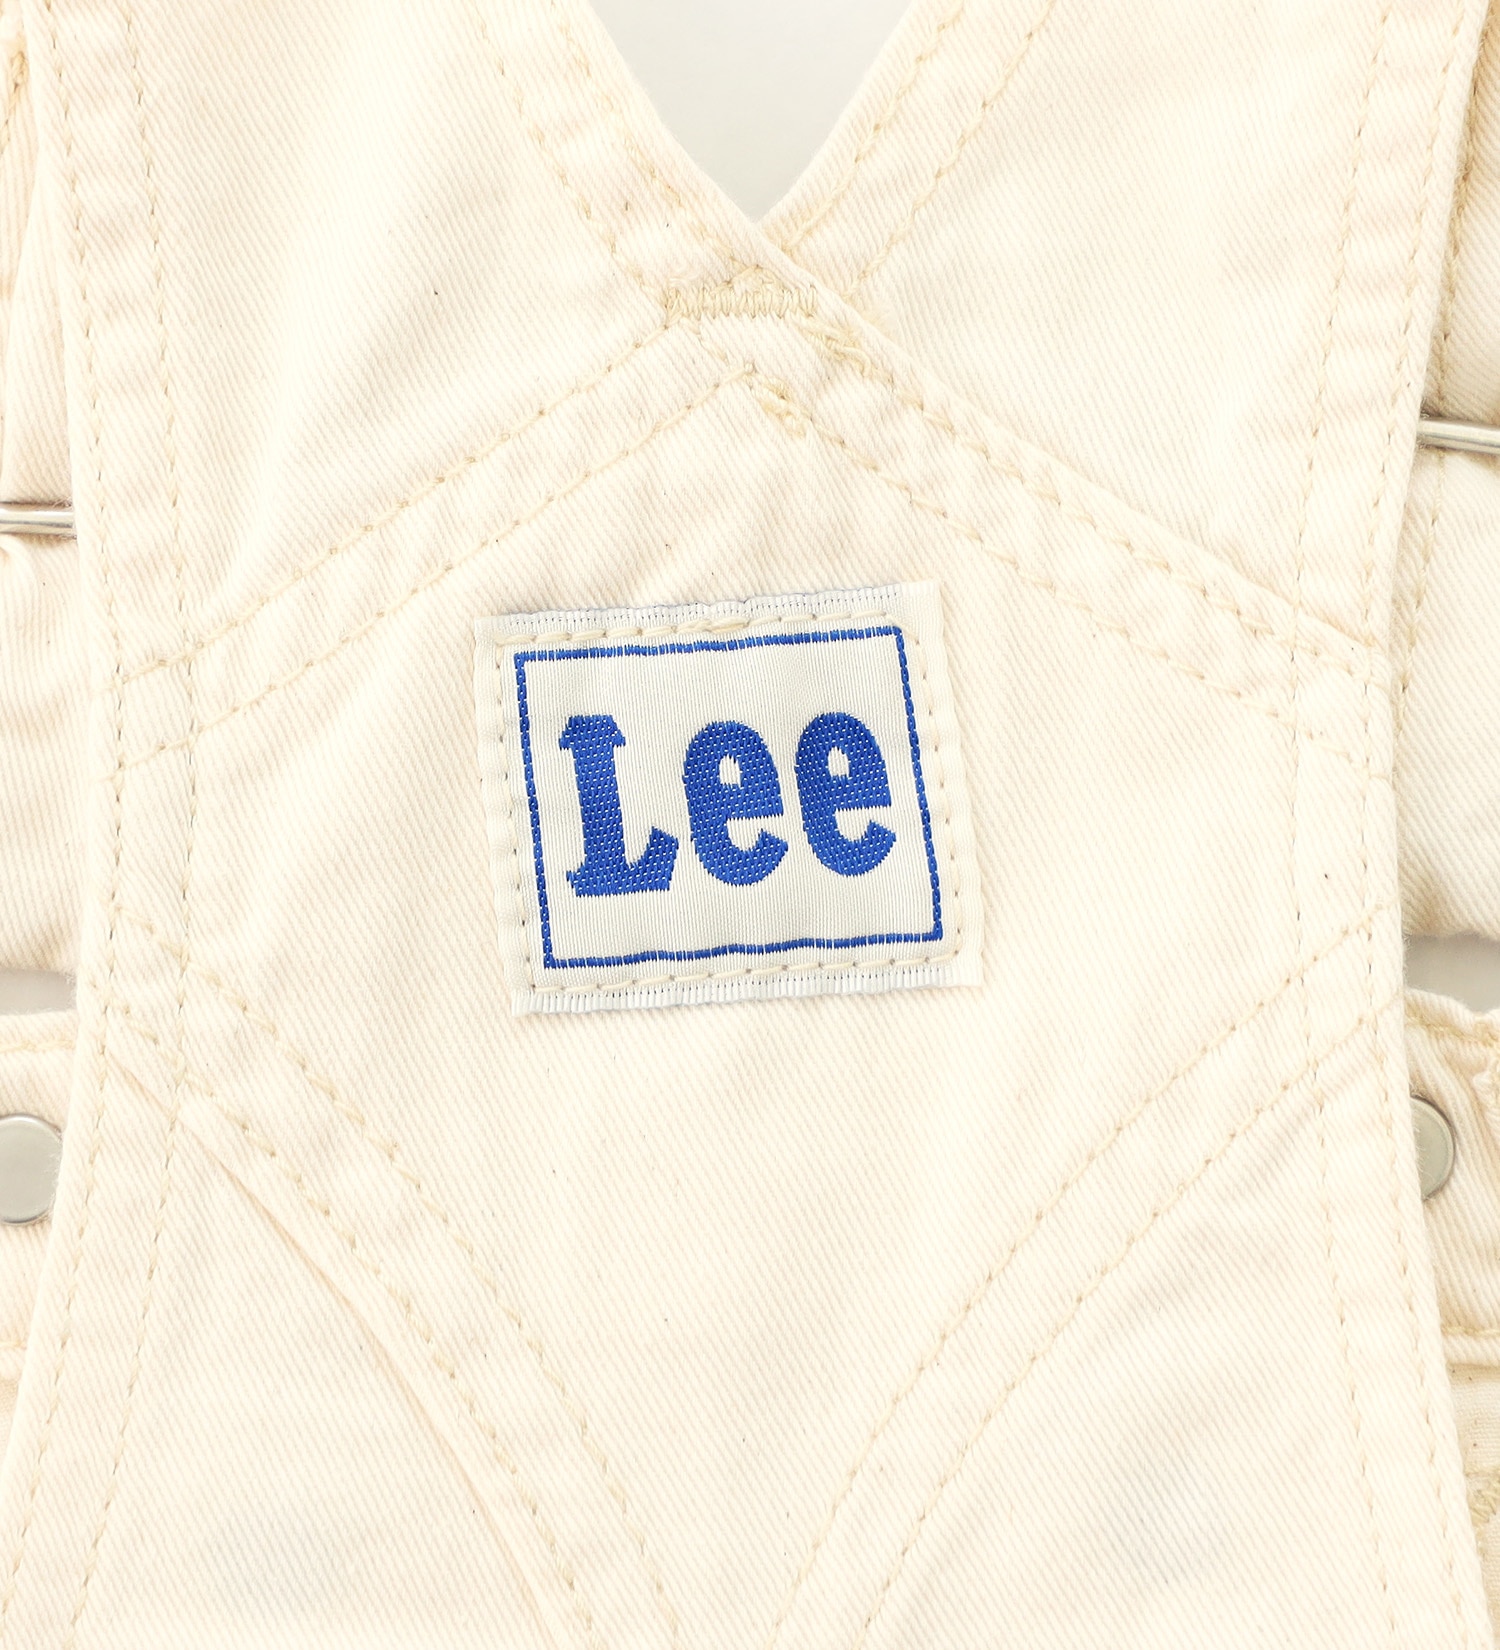 Lee(リー)の【80-100cm】ベビー ジャンパースカート|オールインワン/ジャンパースカート/キッズ|アイボリー